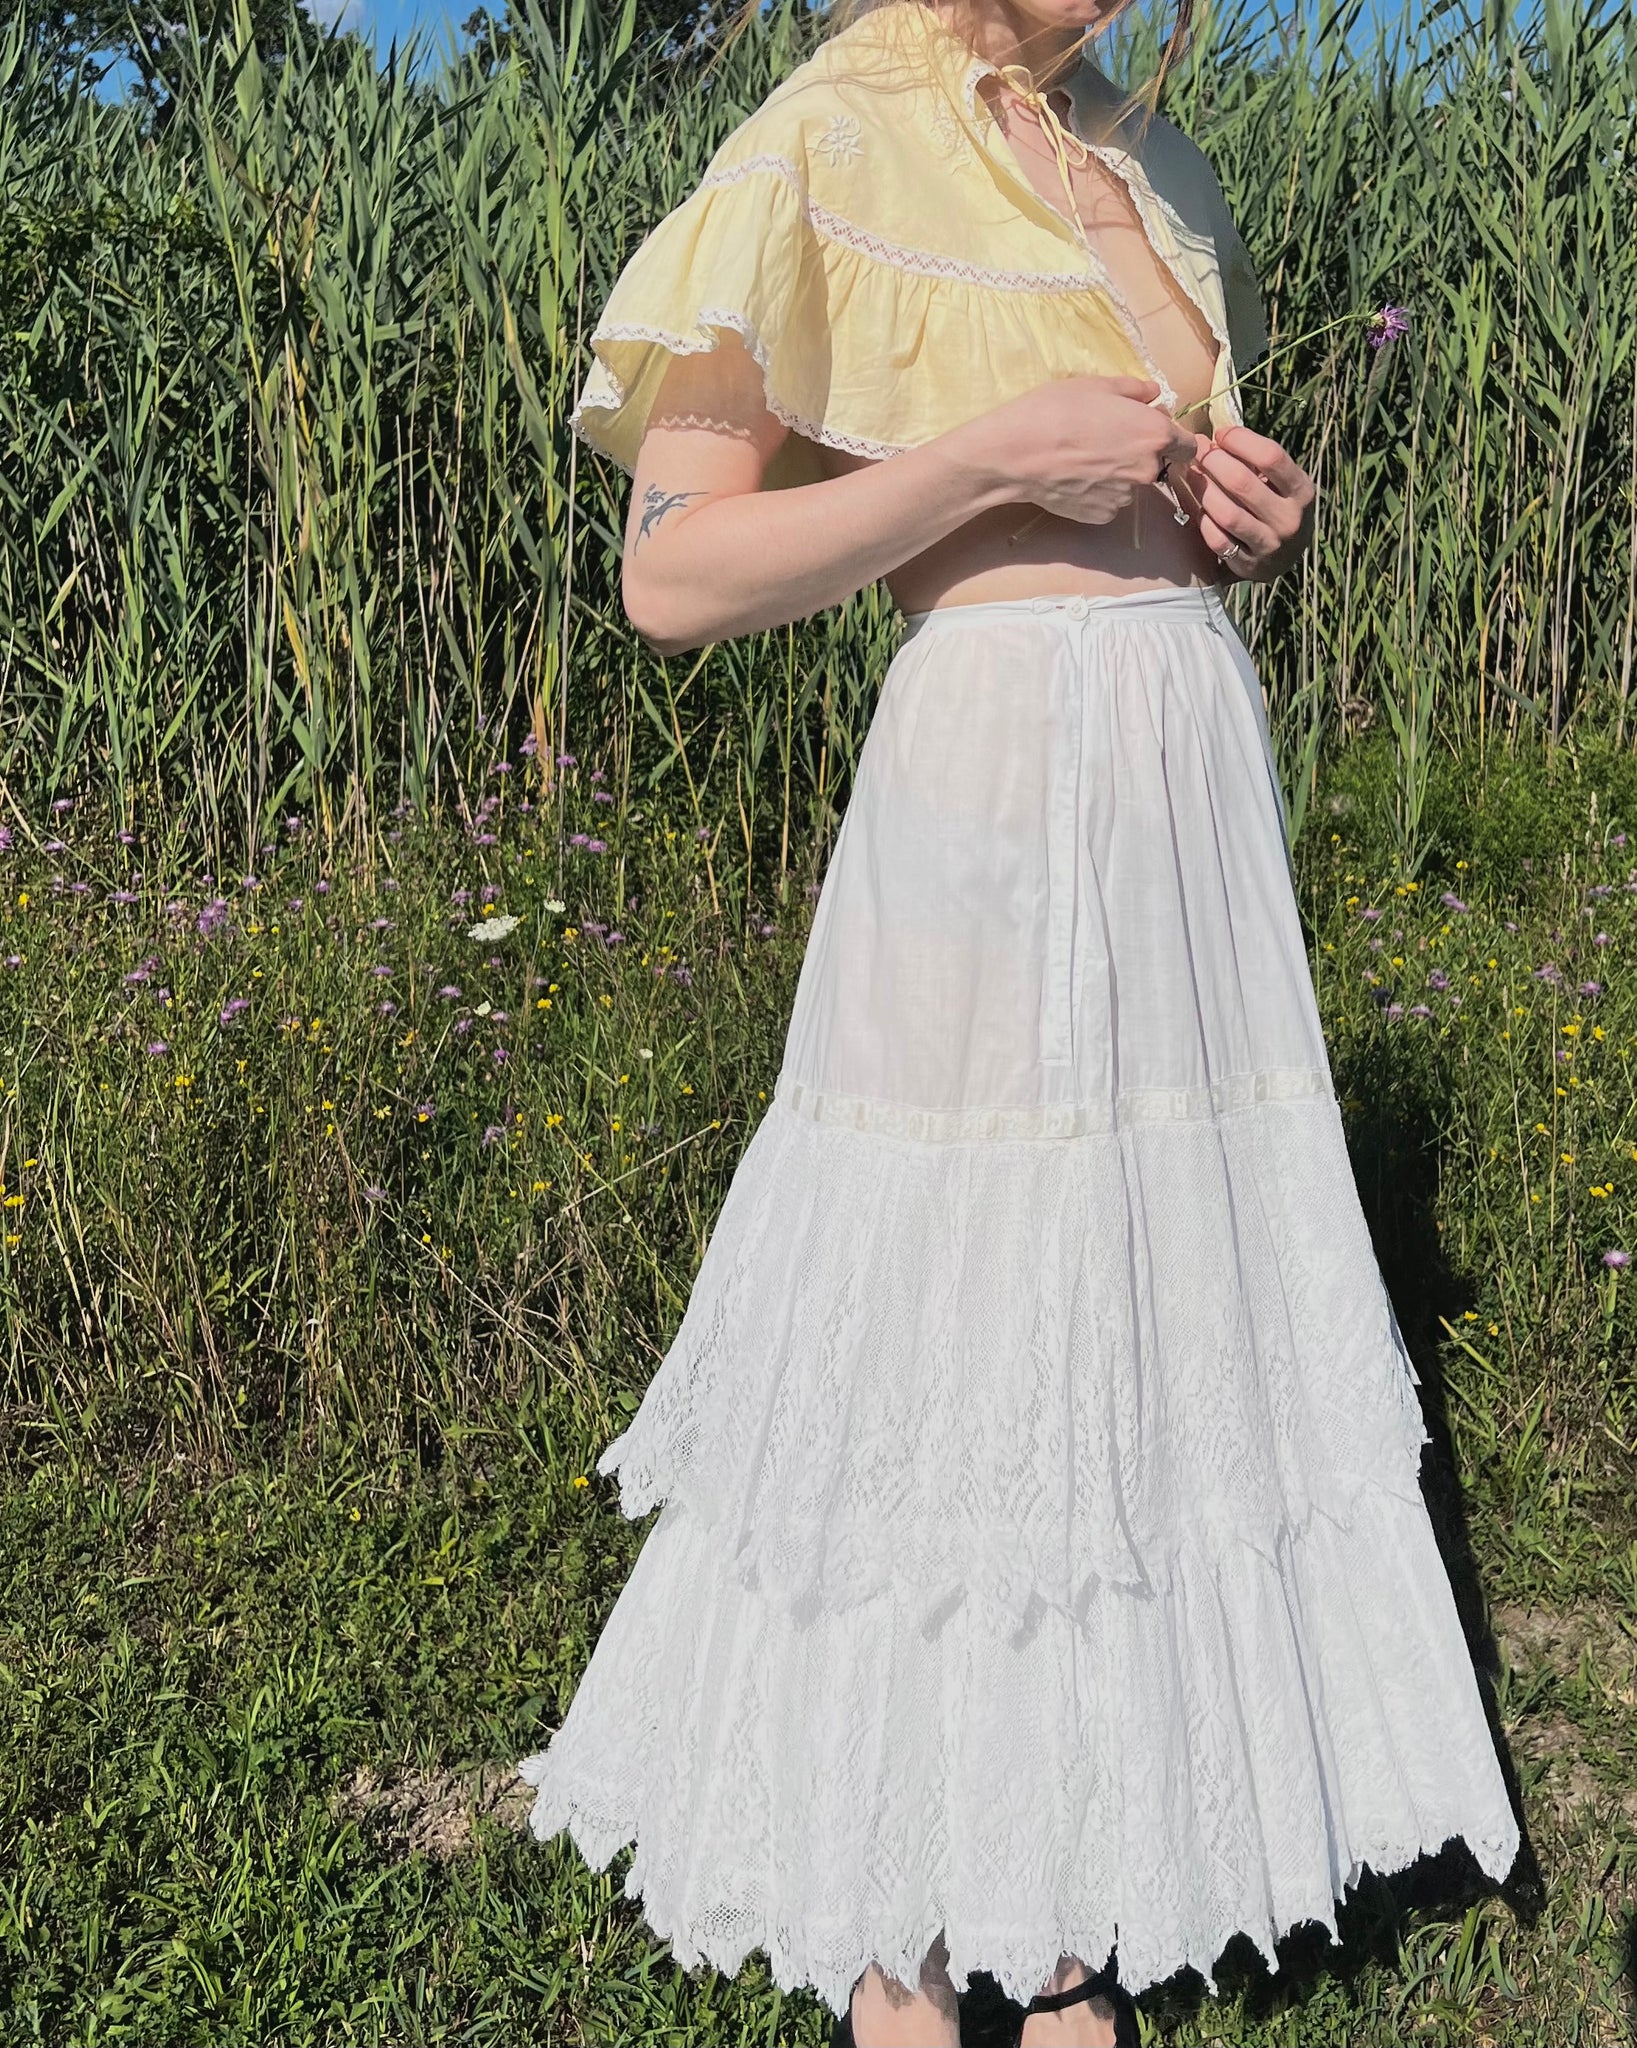 1910s Floral Lace White Cotton Skirt Petticoat Original Ribbon